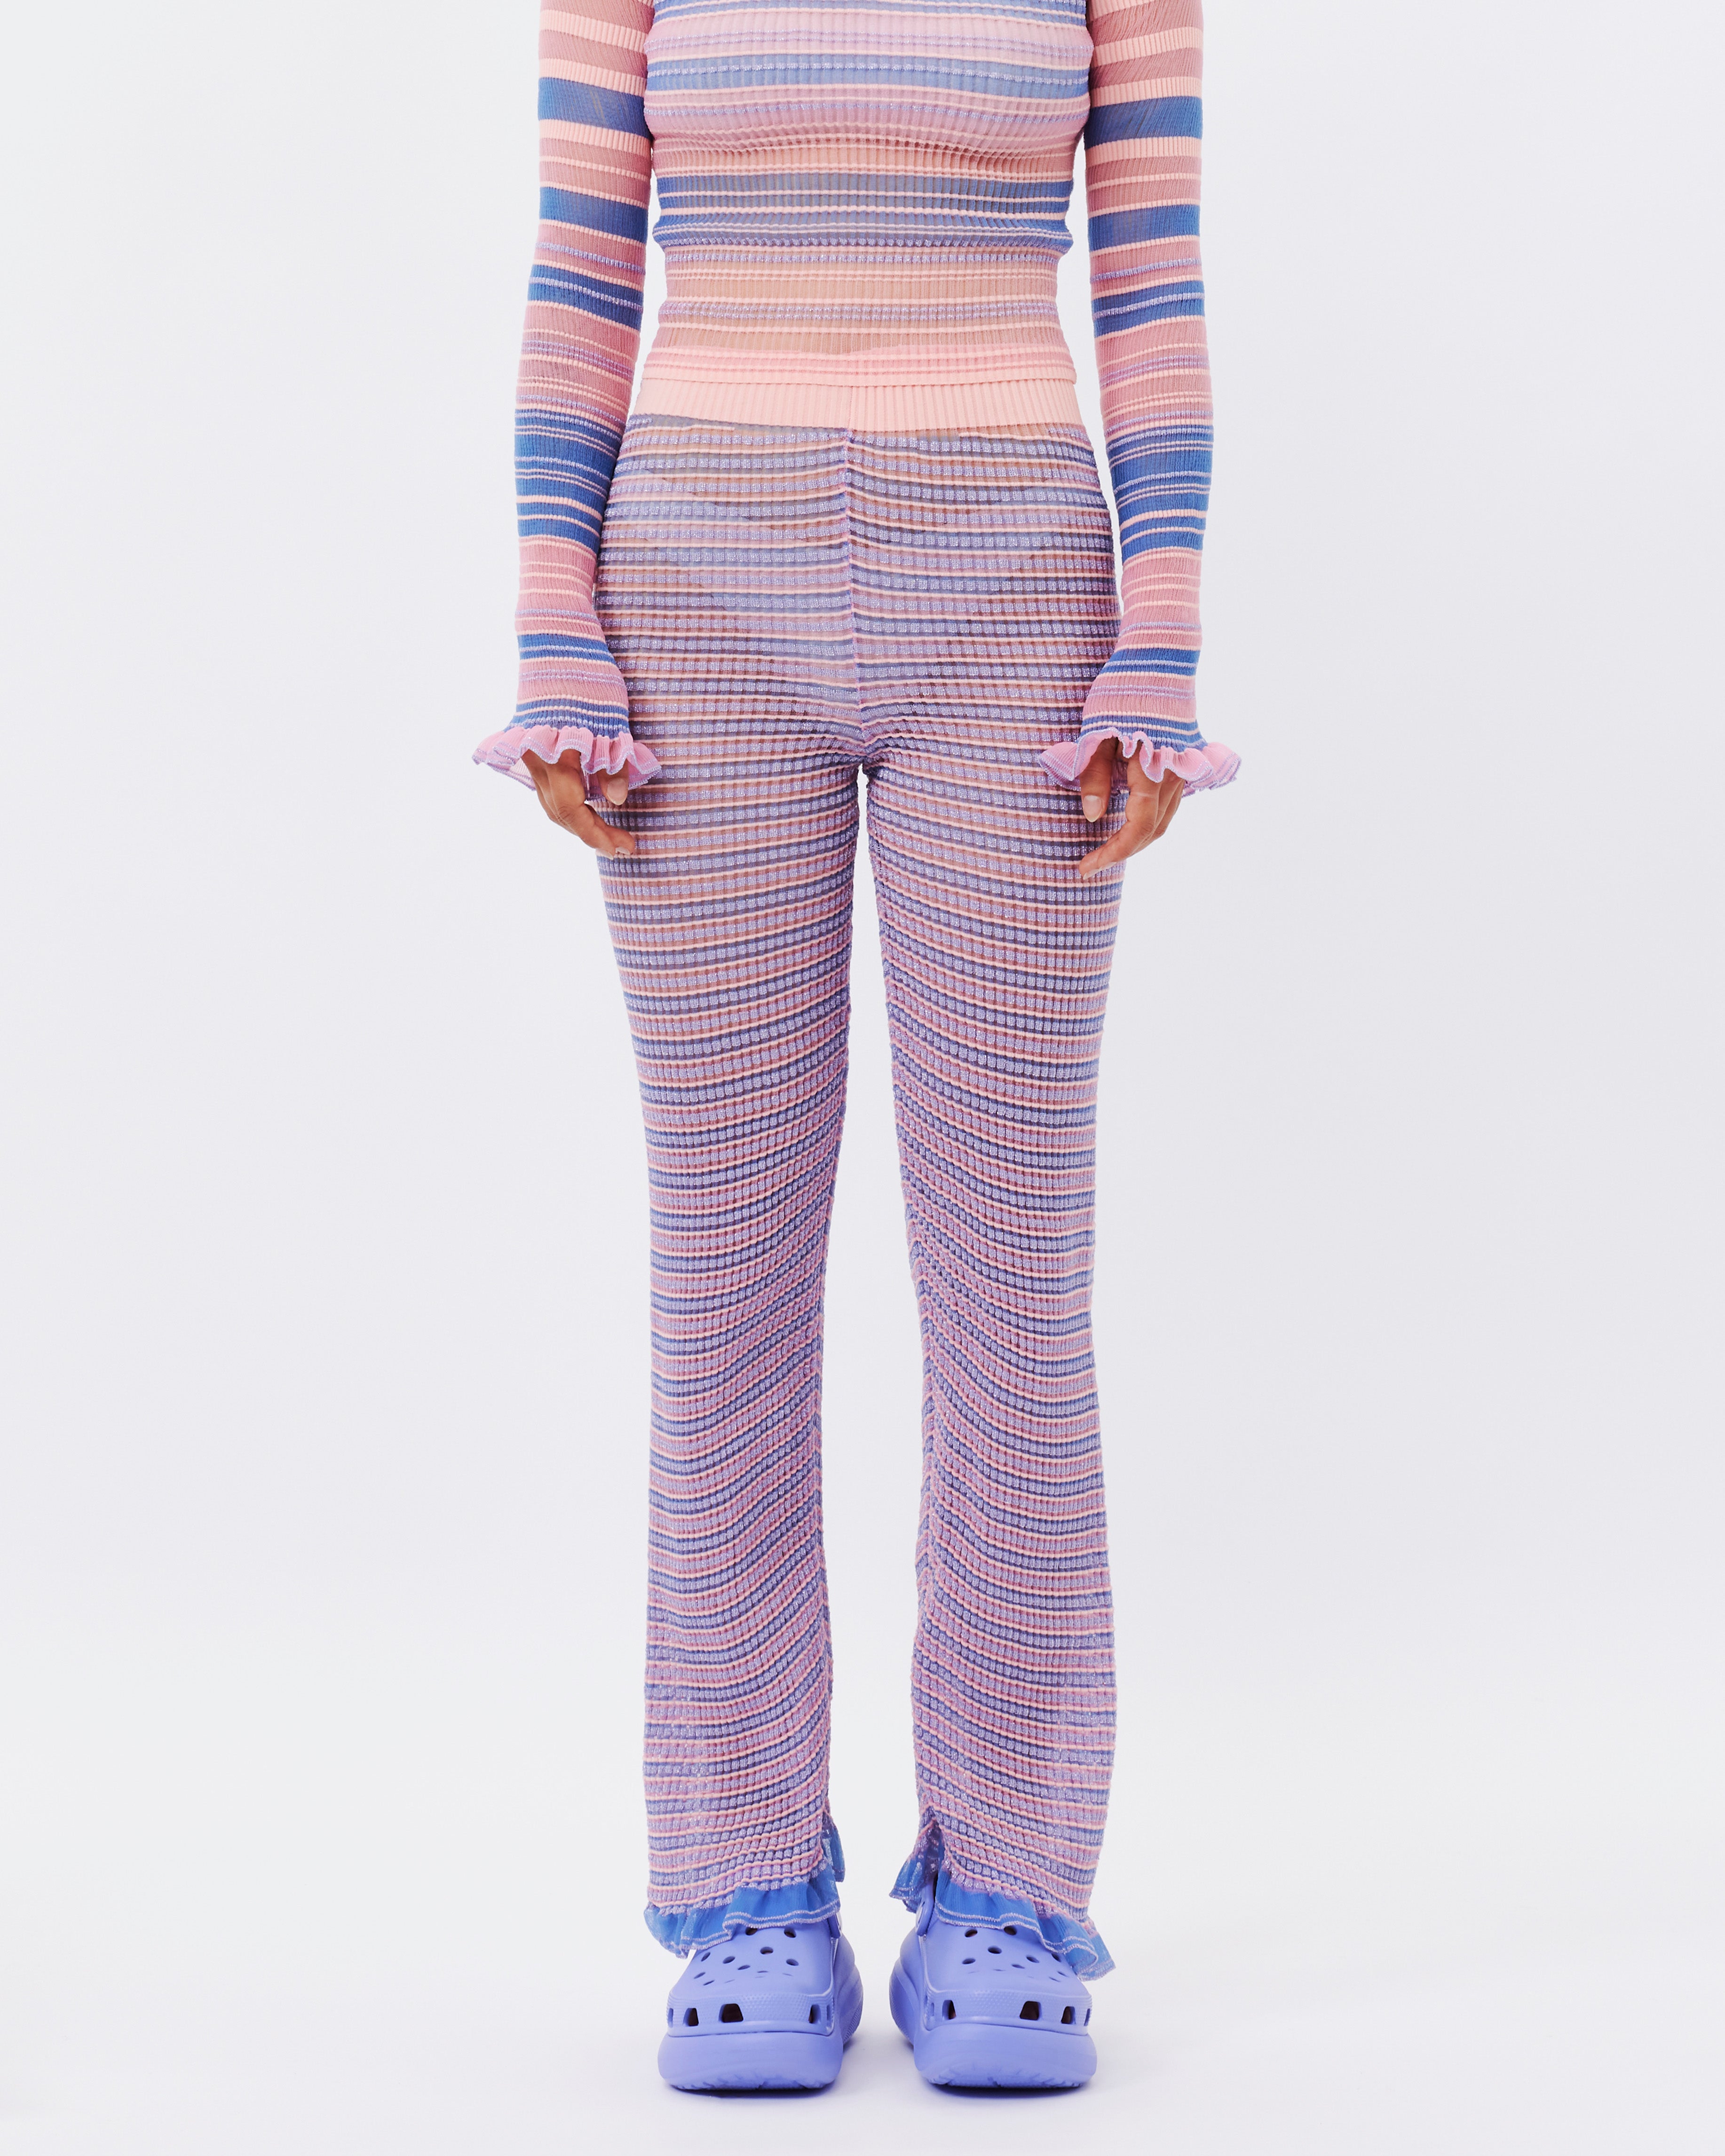 Nadia Wire Sweet secret trouser pink/powder blue 546-PNK